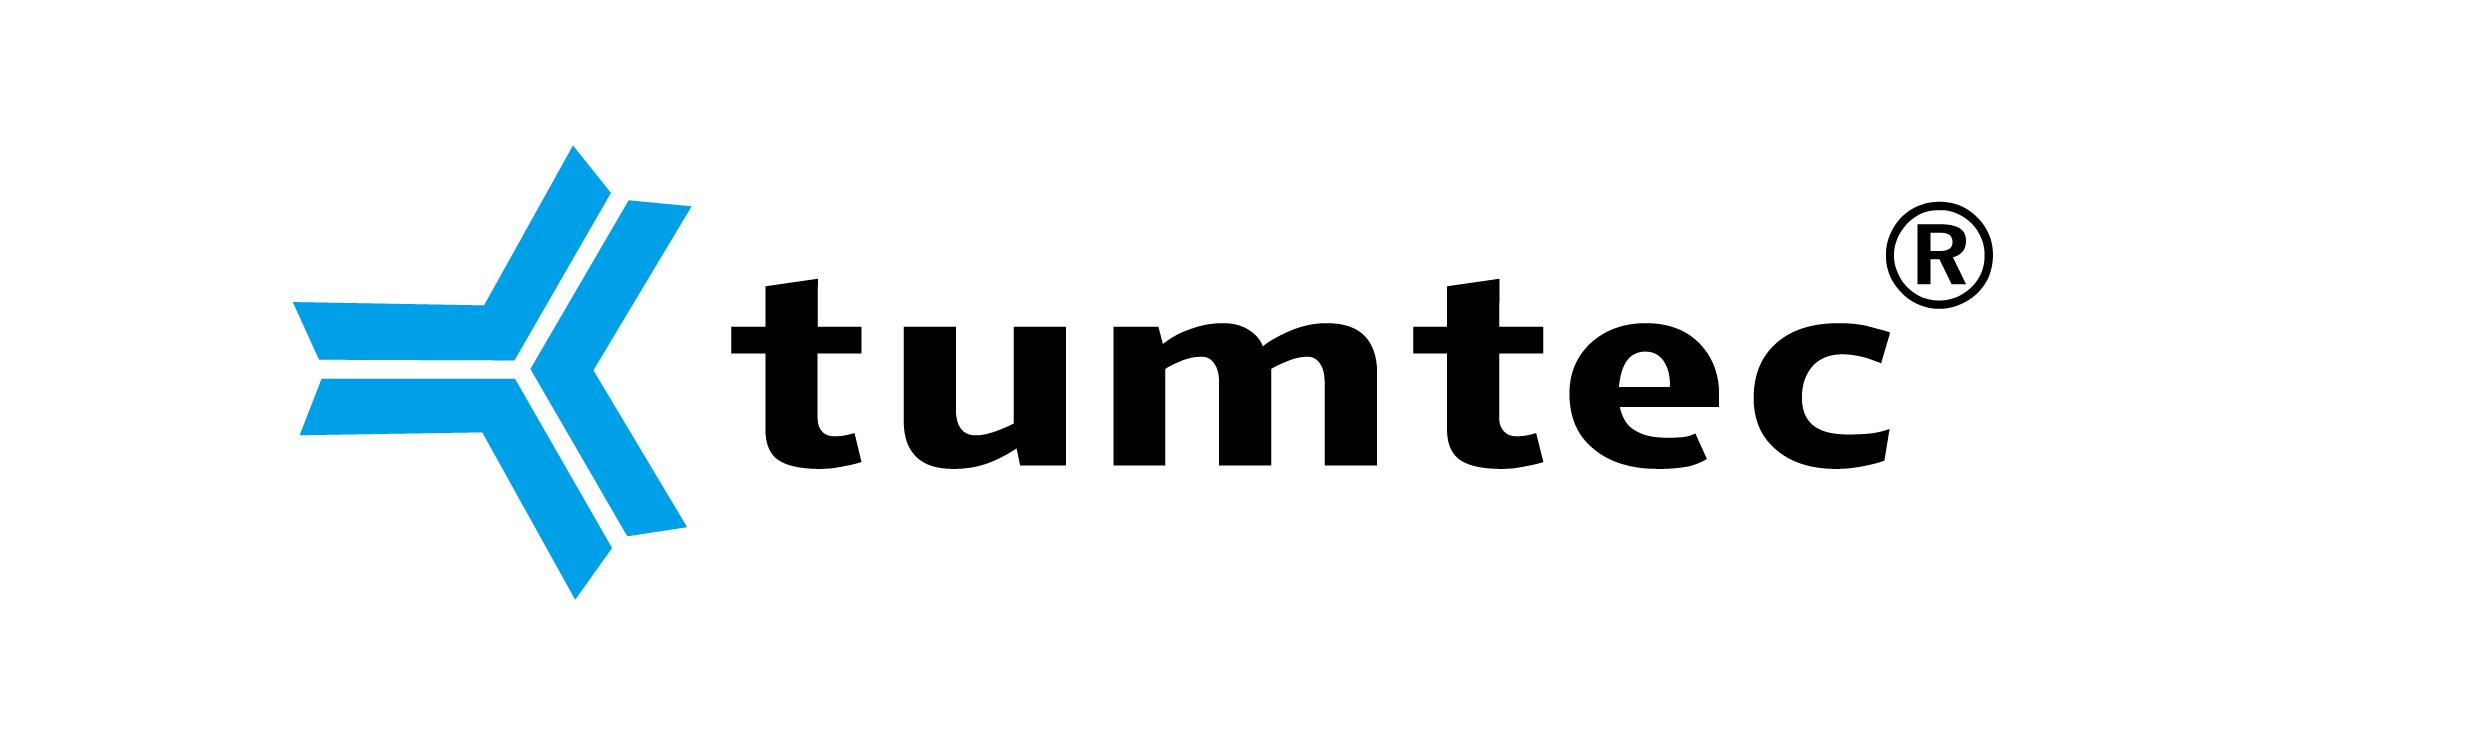 Tumtec  Array image52